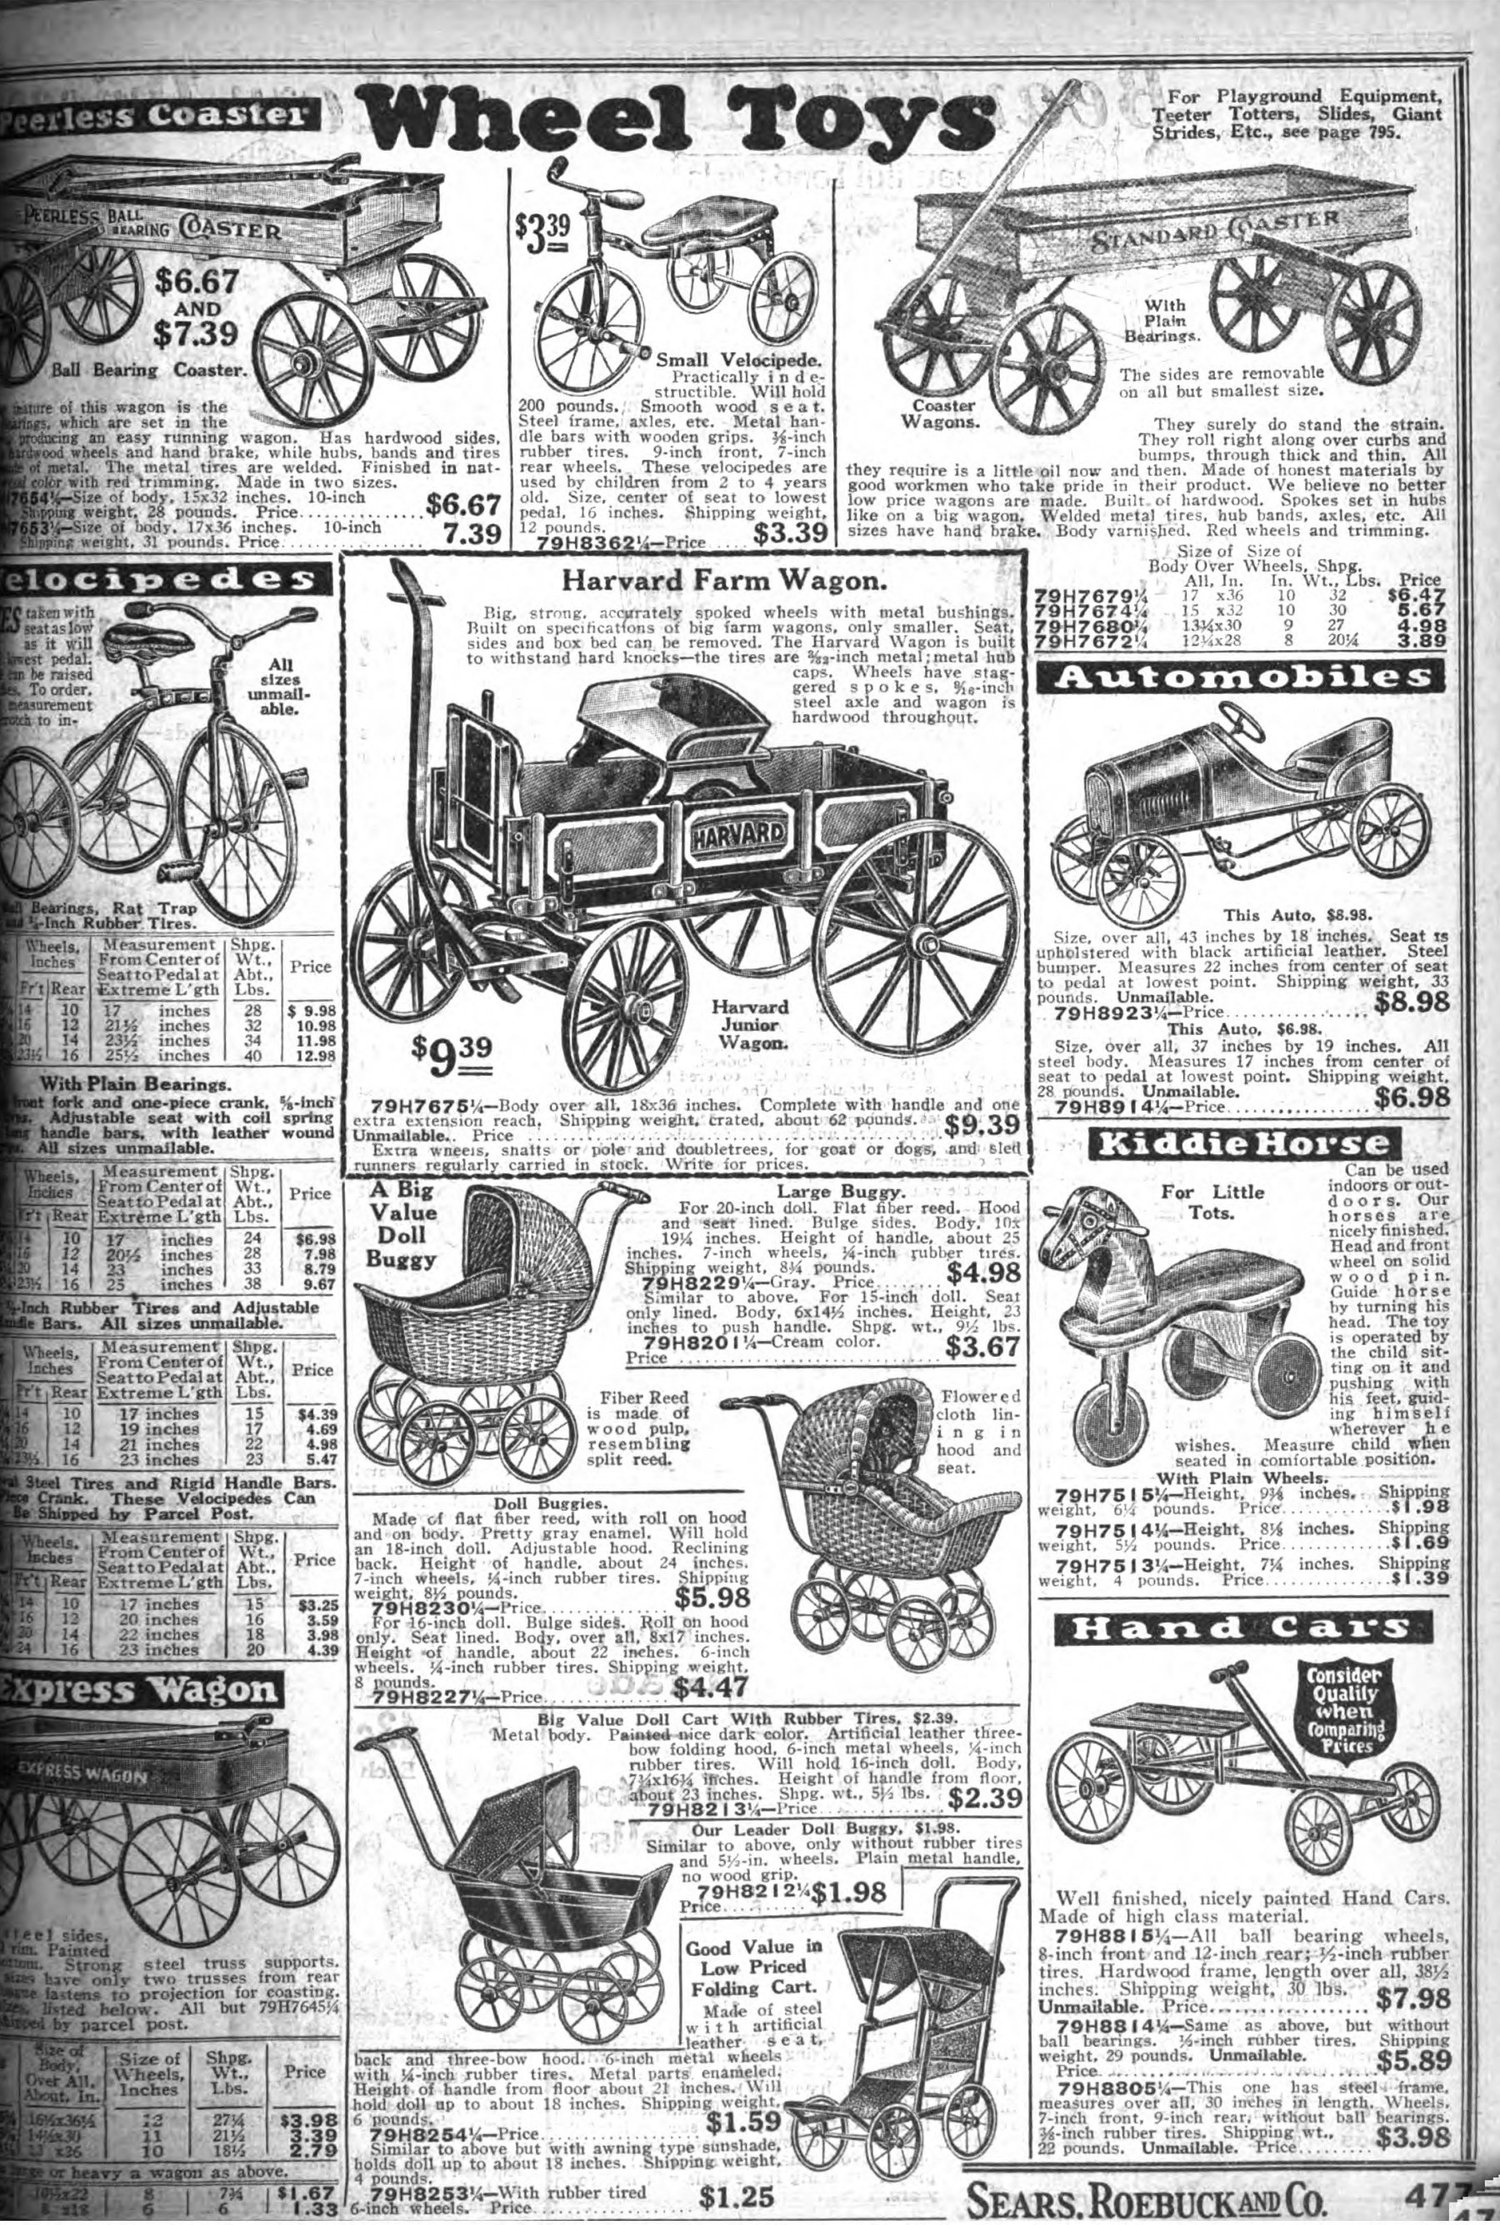 Sears Roebuck Catalog 1922